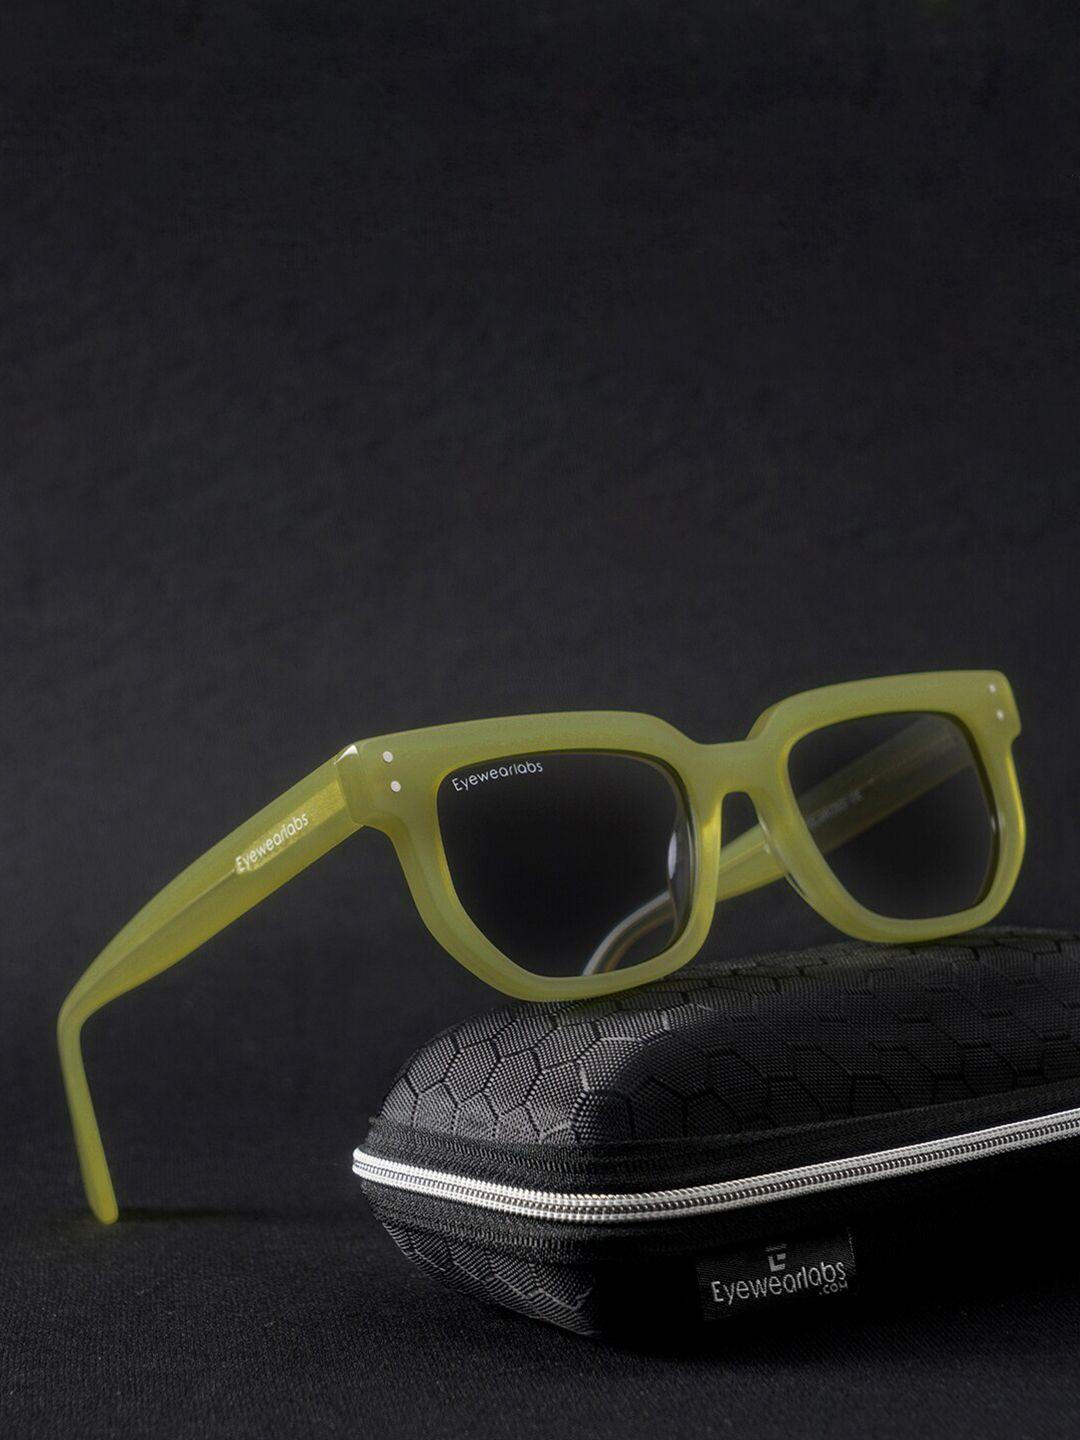 eyewearlabs women lens & wayfarer sunglasses with uv protected lens ccheryllmsc3el1177